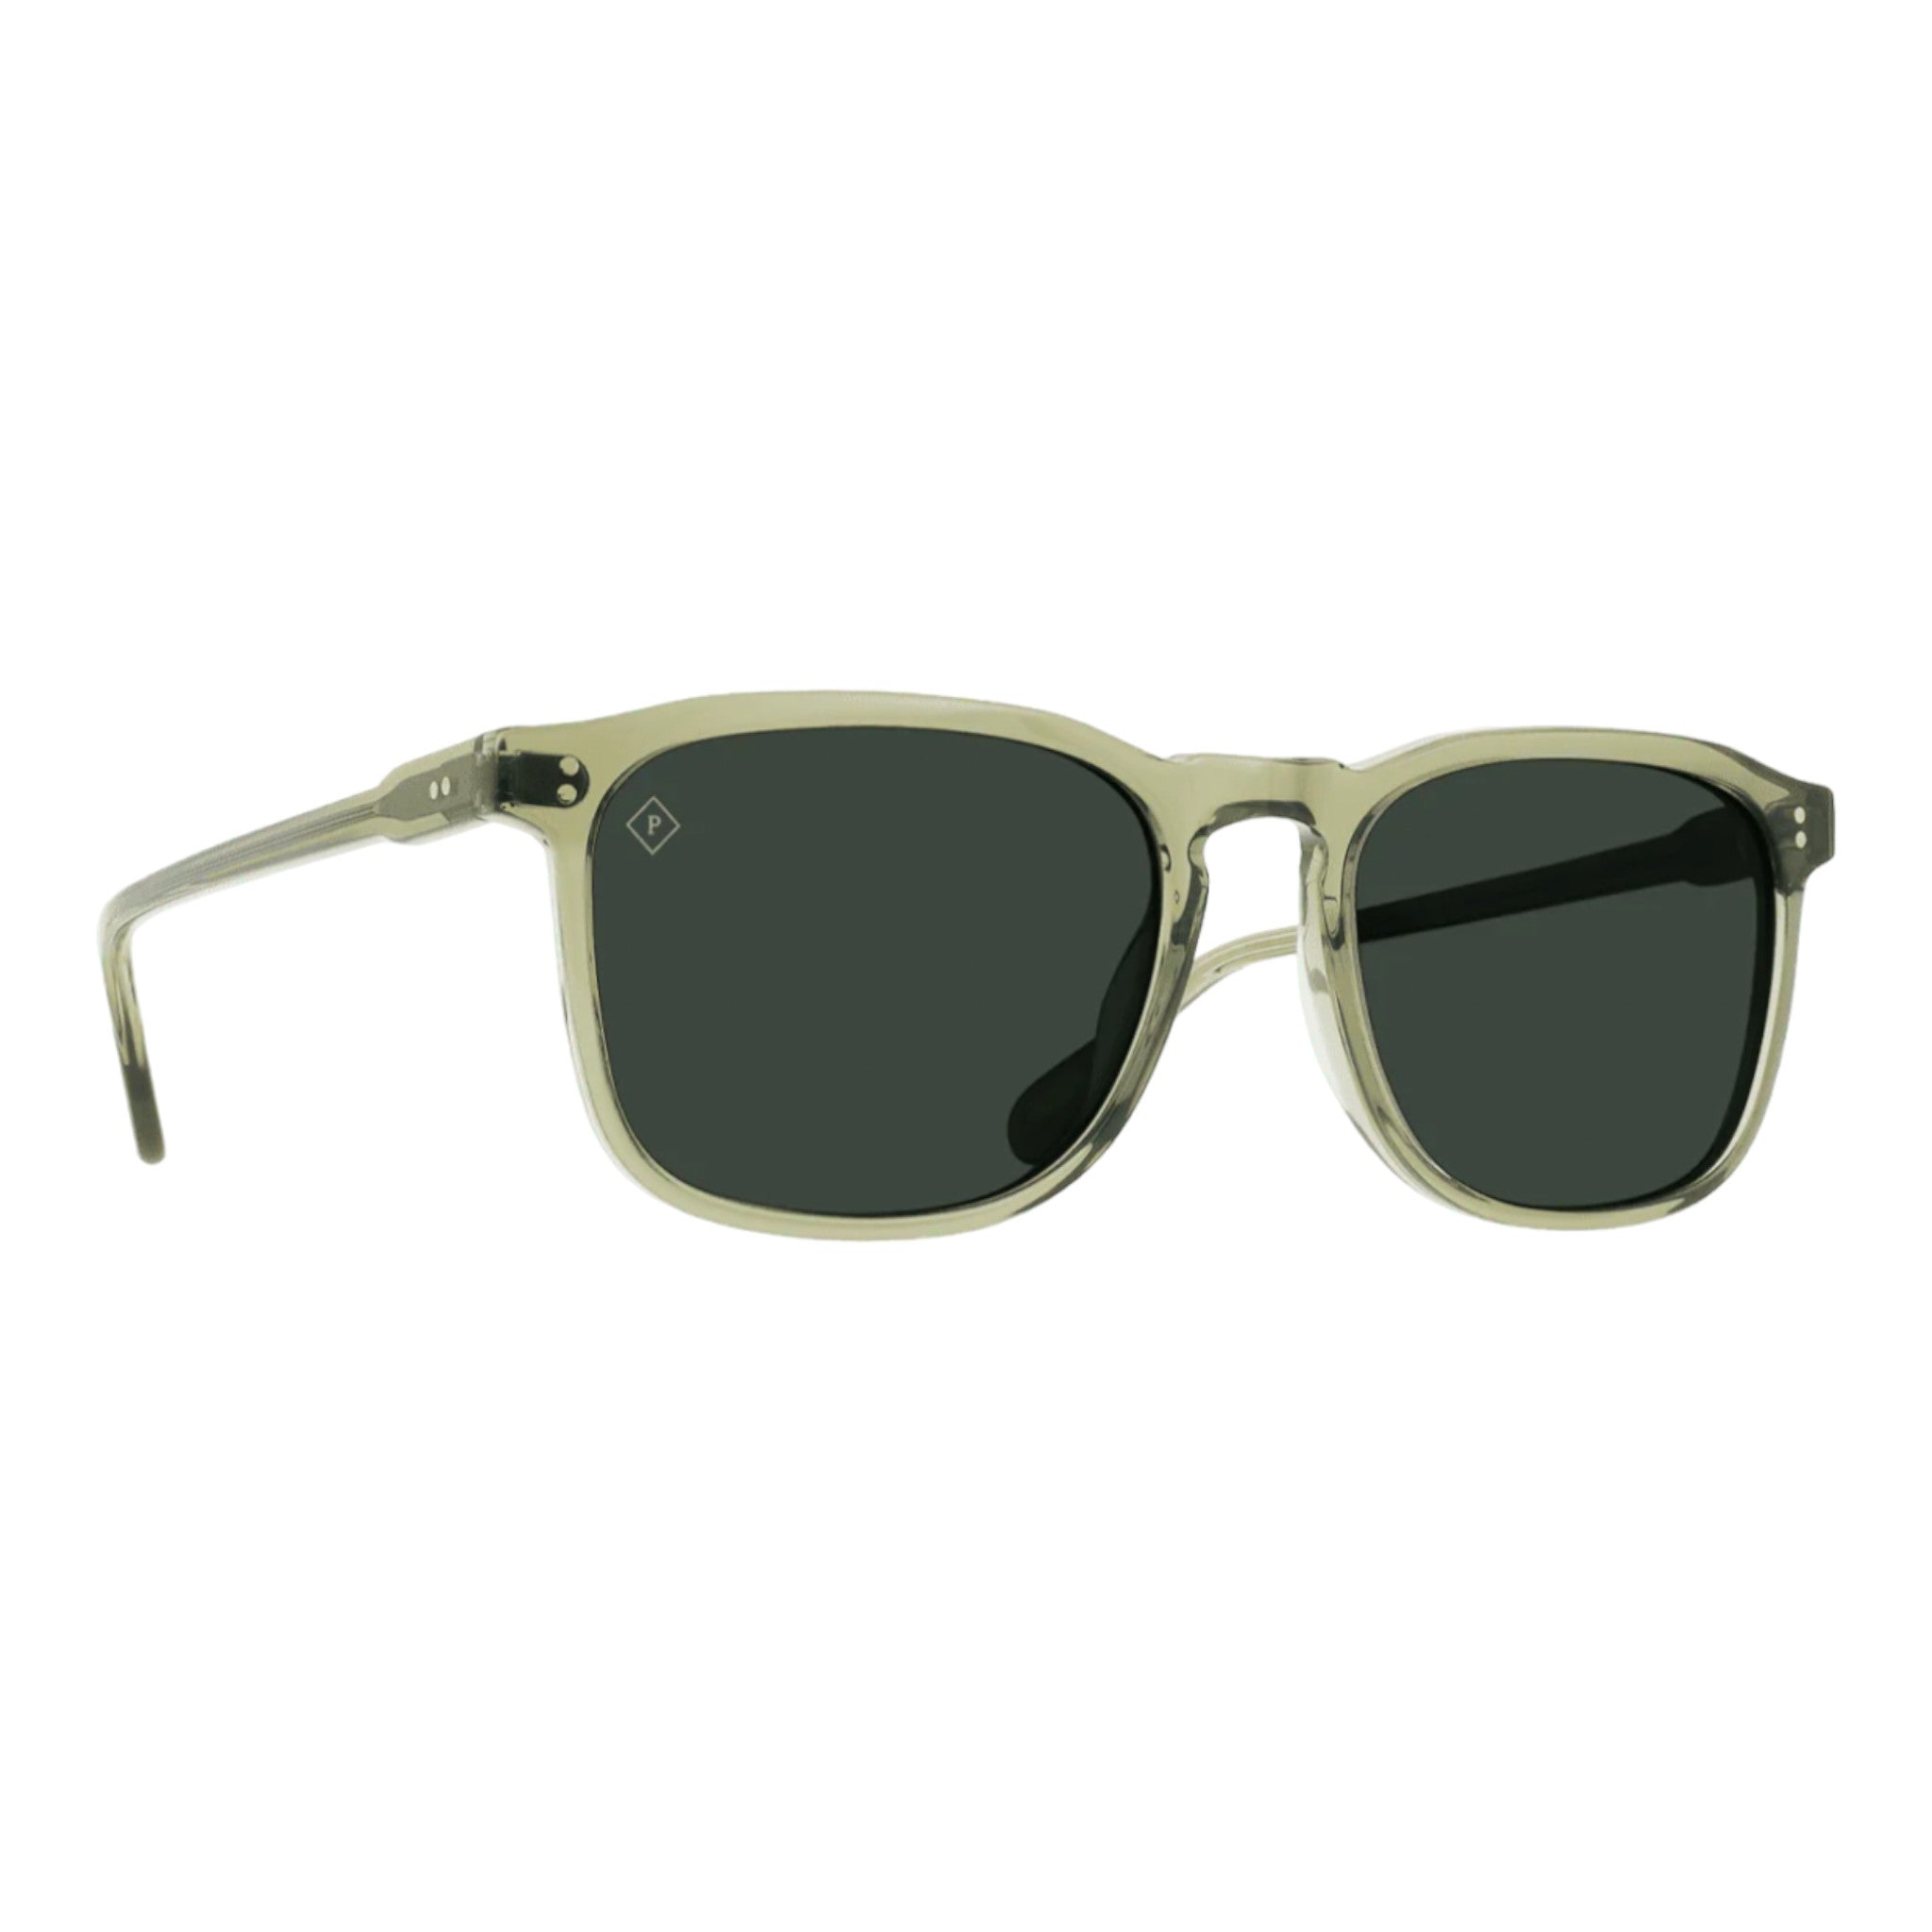 Raen - Wiley 54 Sunglasses - Cambria / Green Polarized